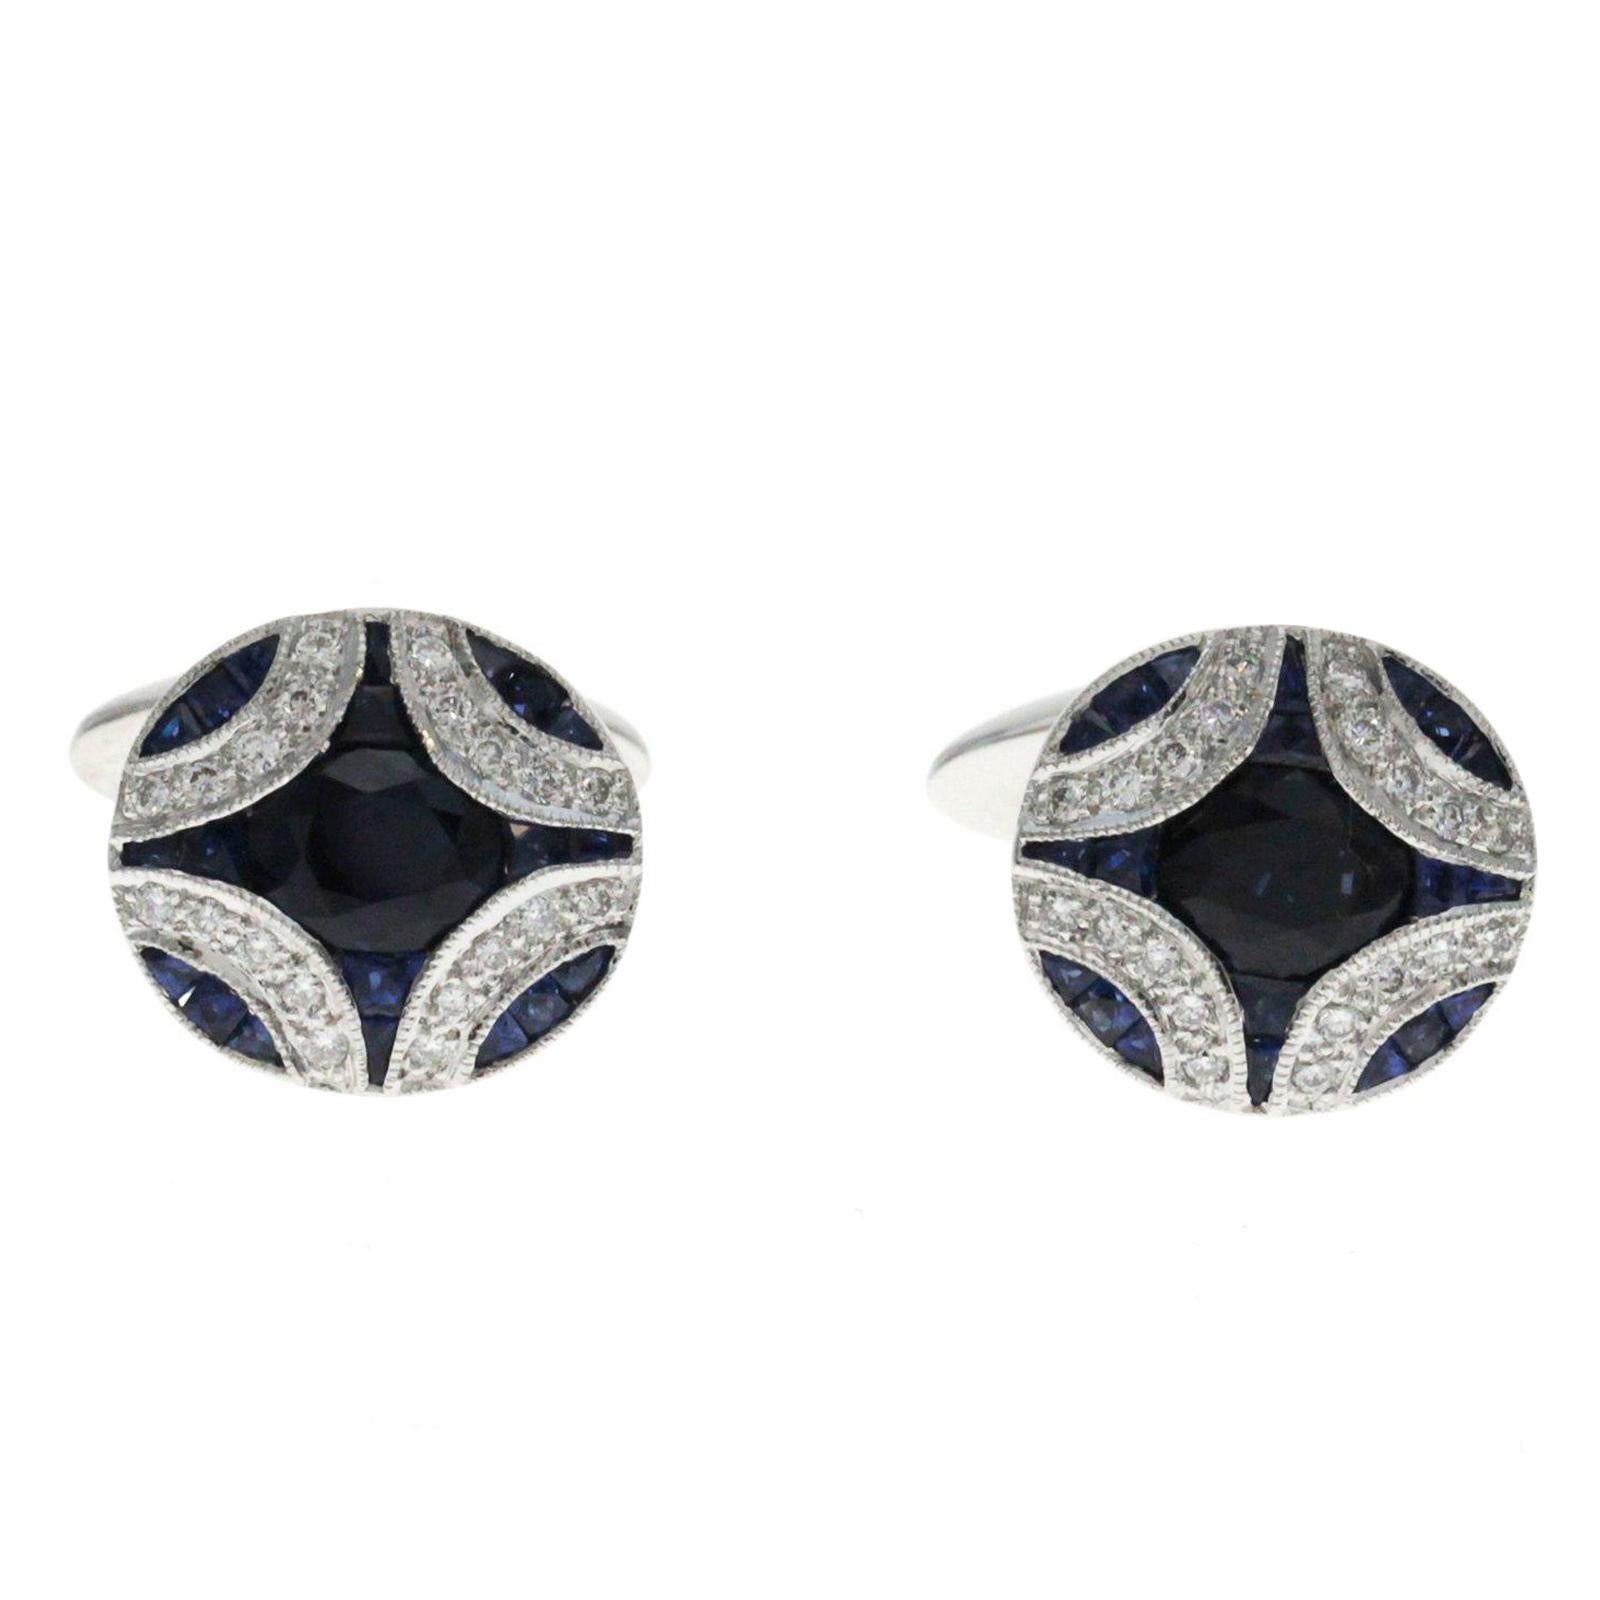 1.34 Carat Natural Sapphire and 0.18 Carat Diamonds in 18 Karat Gold Cufflinks